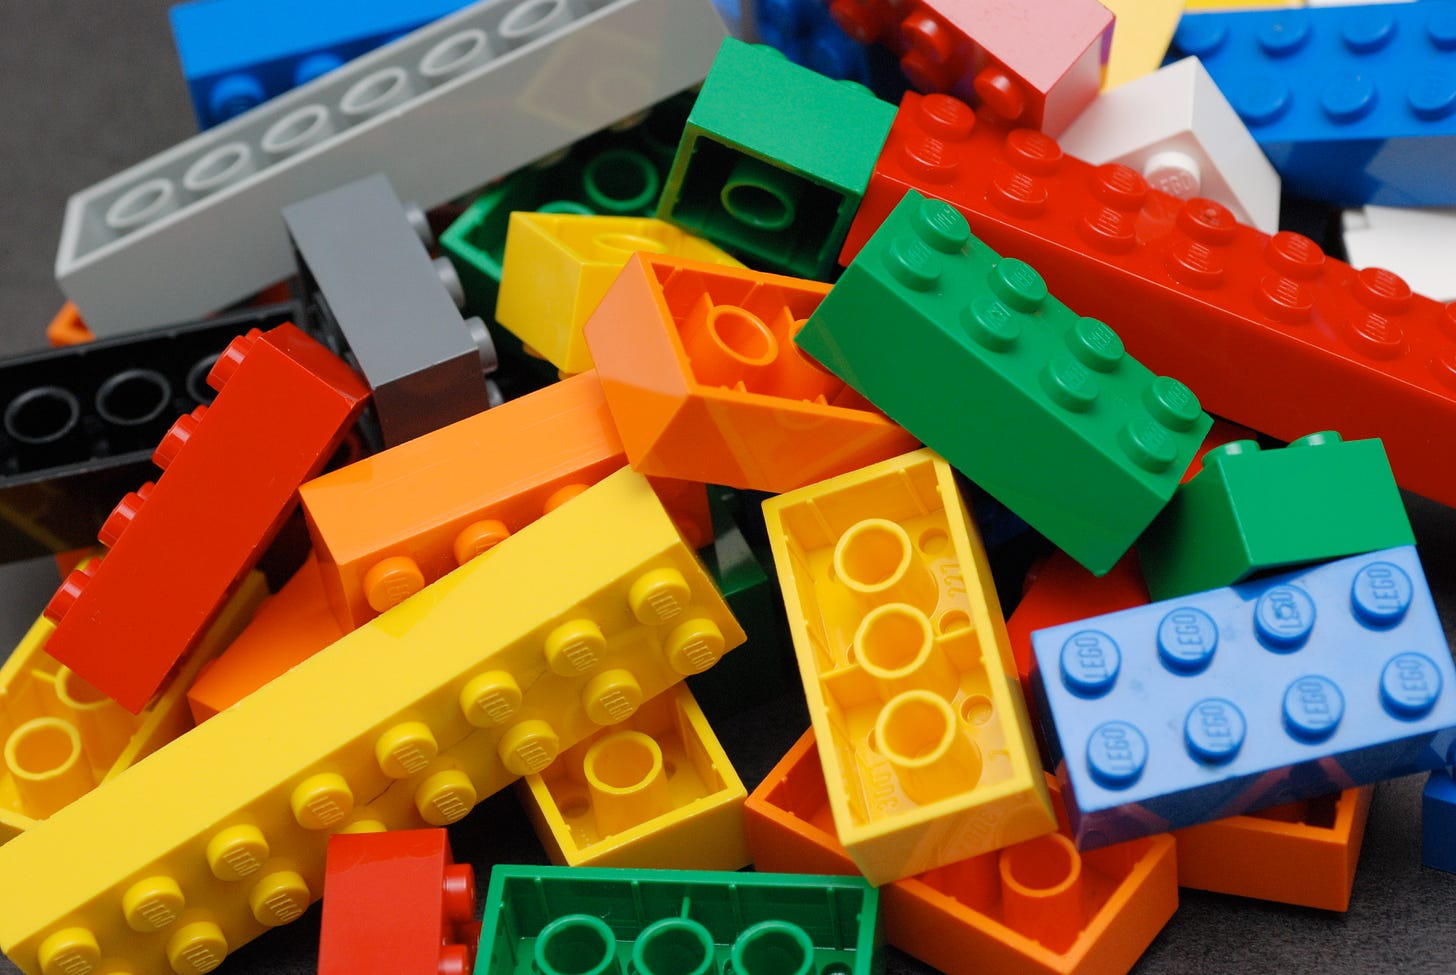 A photo of a pile of lego bricks